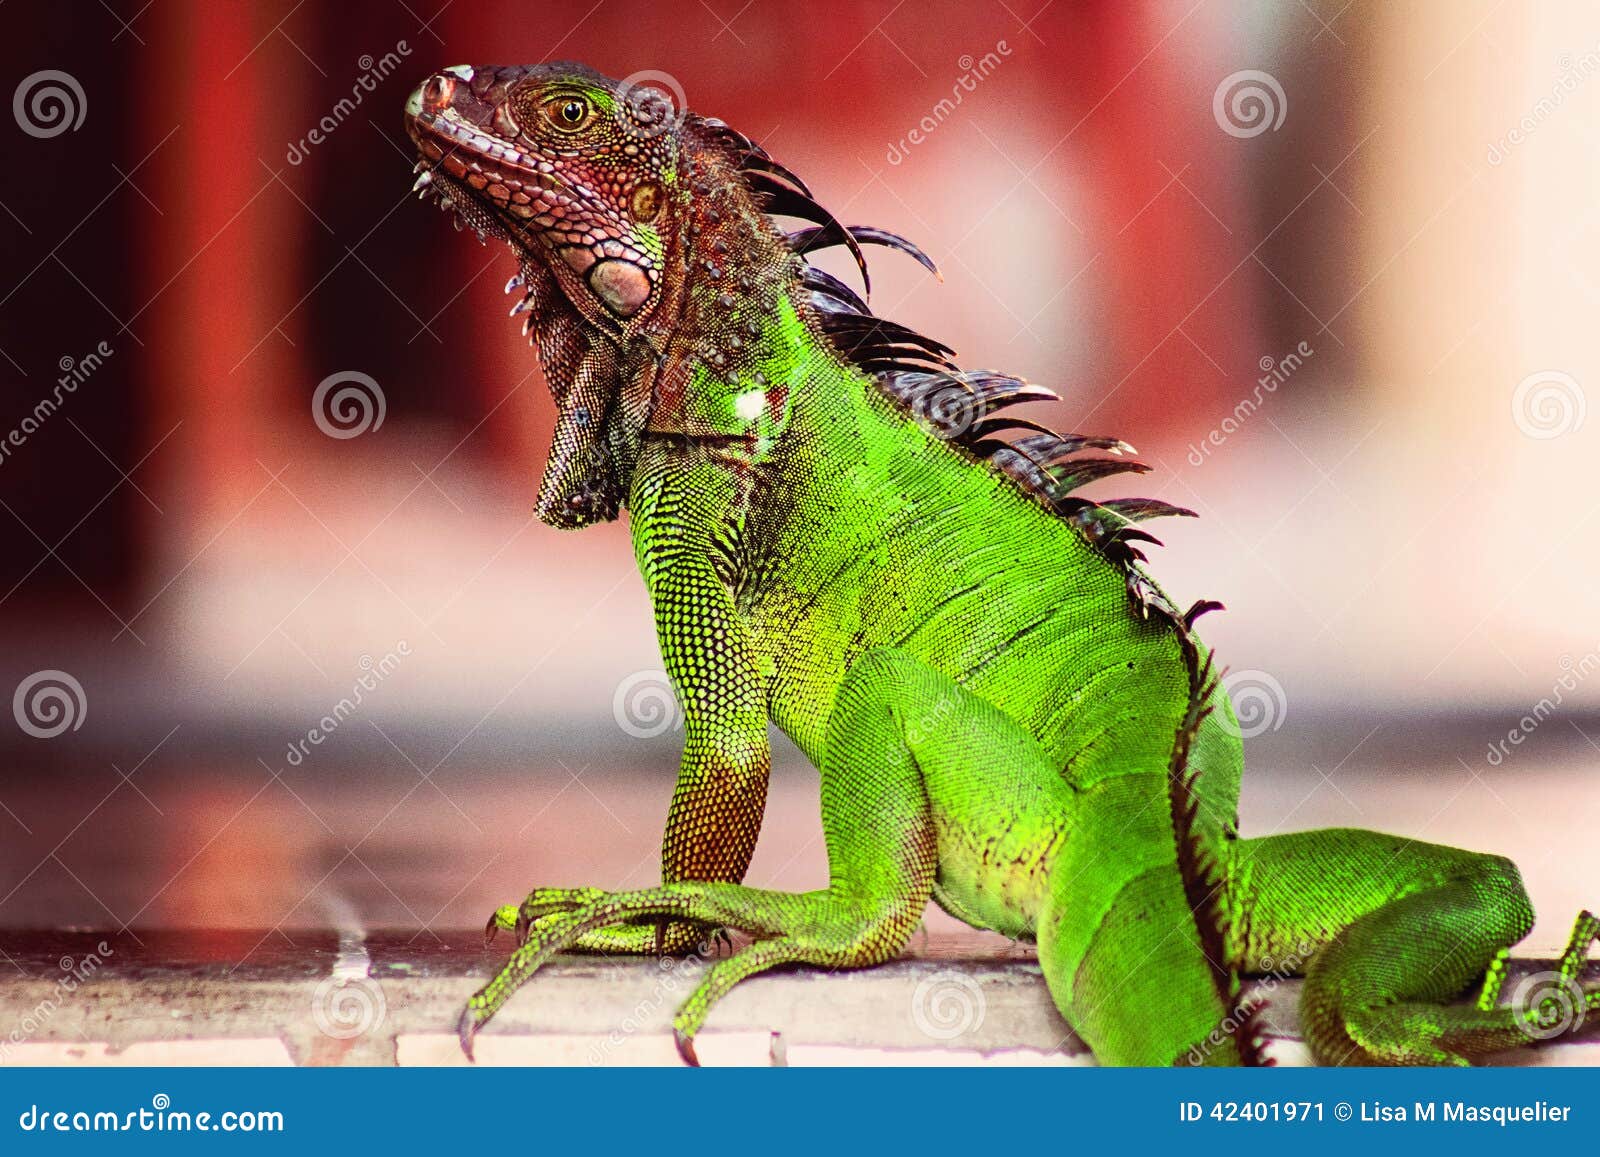 red and green costa rica iguana